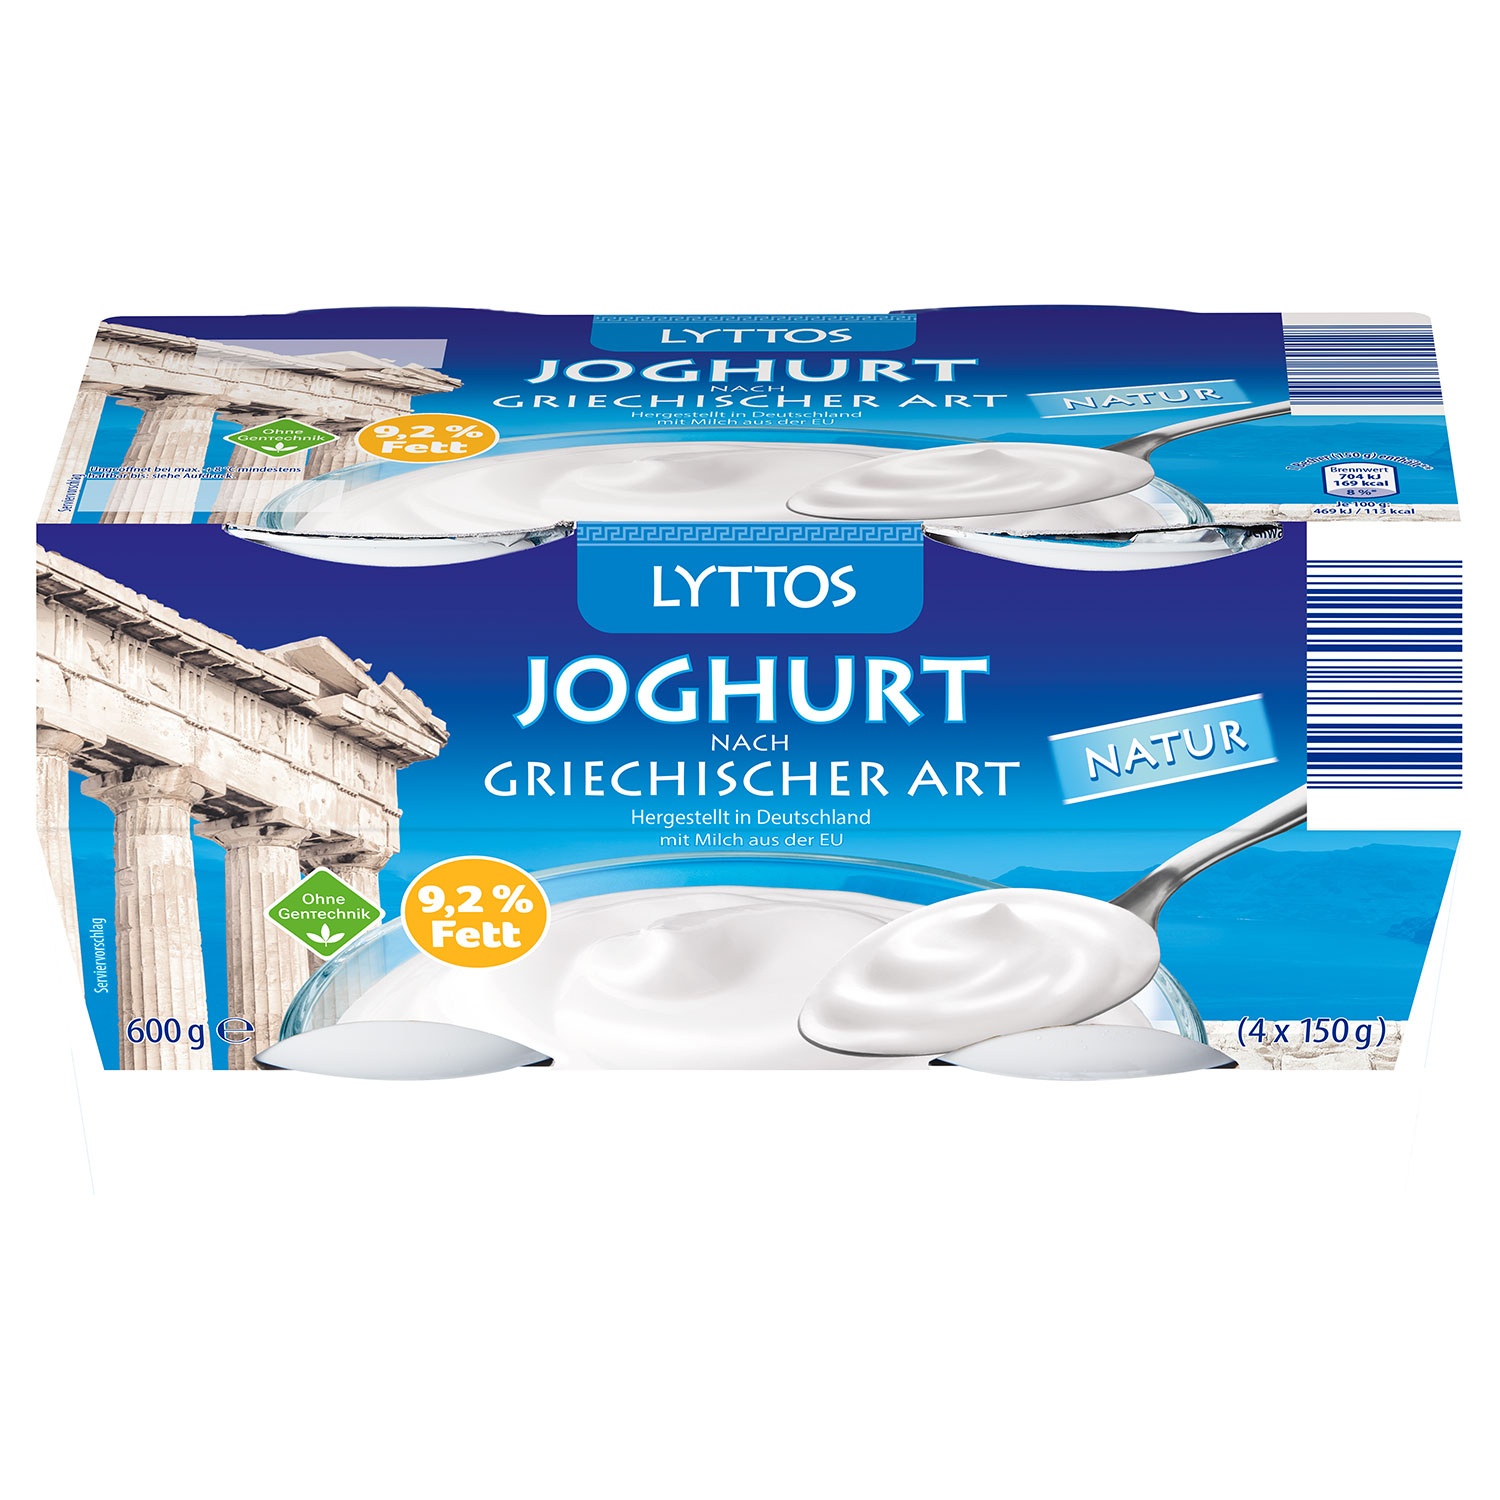 LYTTOS Joghurt nach griechischer Art 600 g